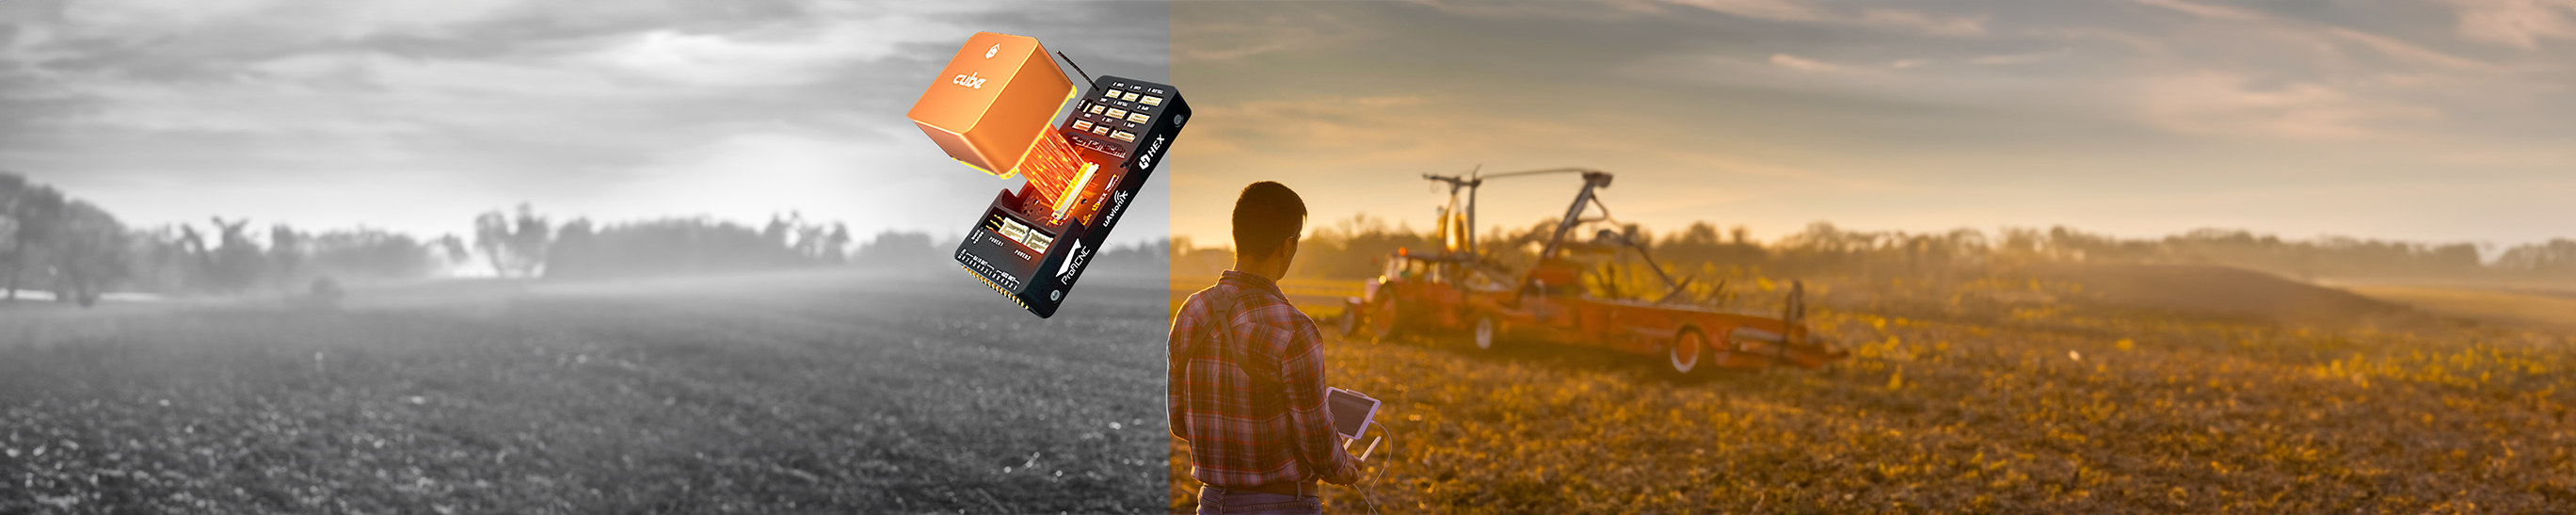 A CubePilot Orange Standard Set device on the left side, highlighting the integration of advanced technology in modern agriculture. - Aeroboticshop.com